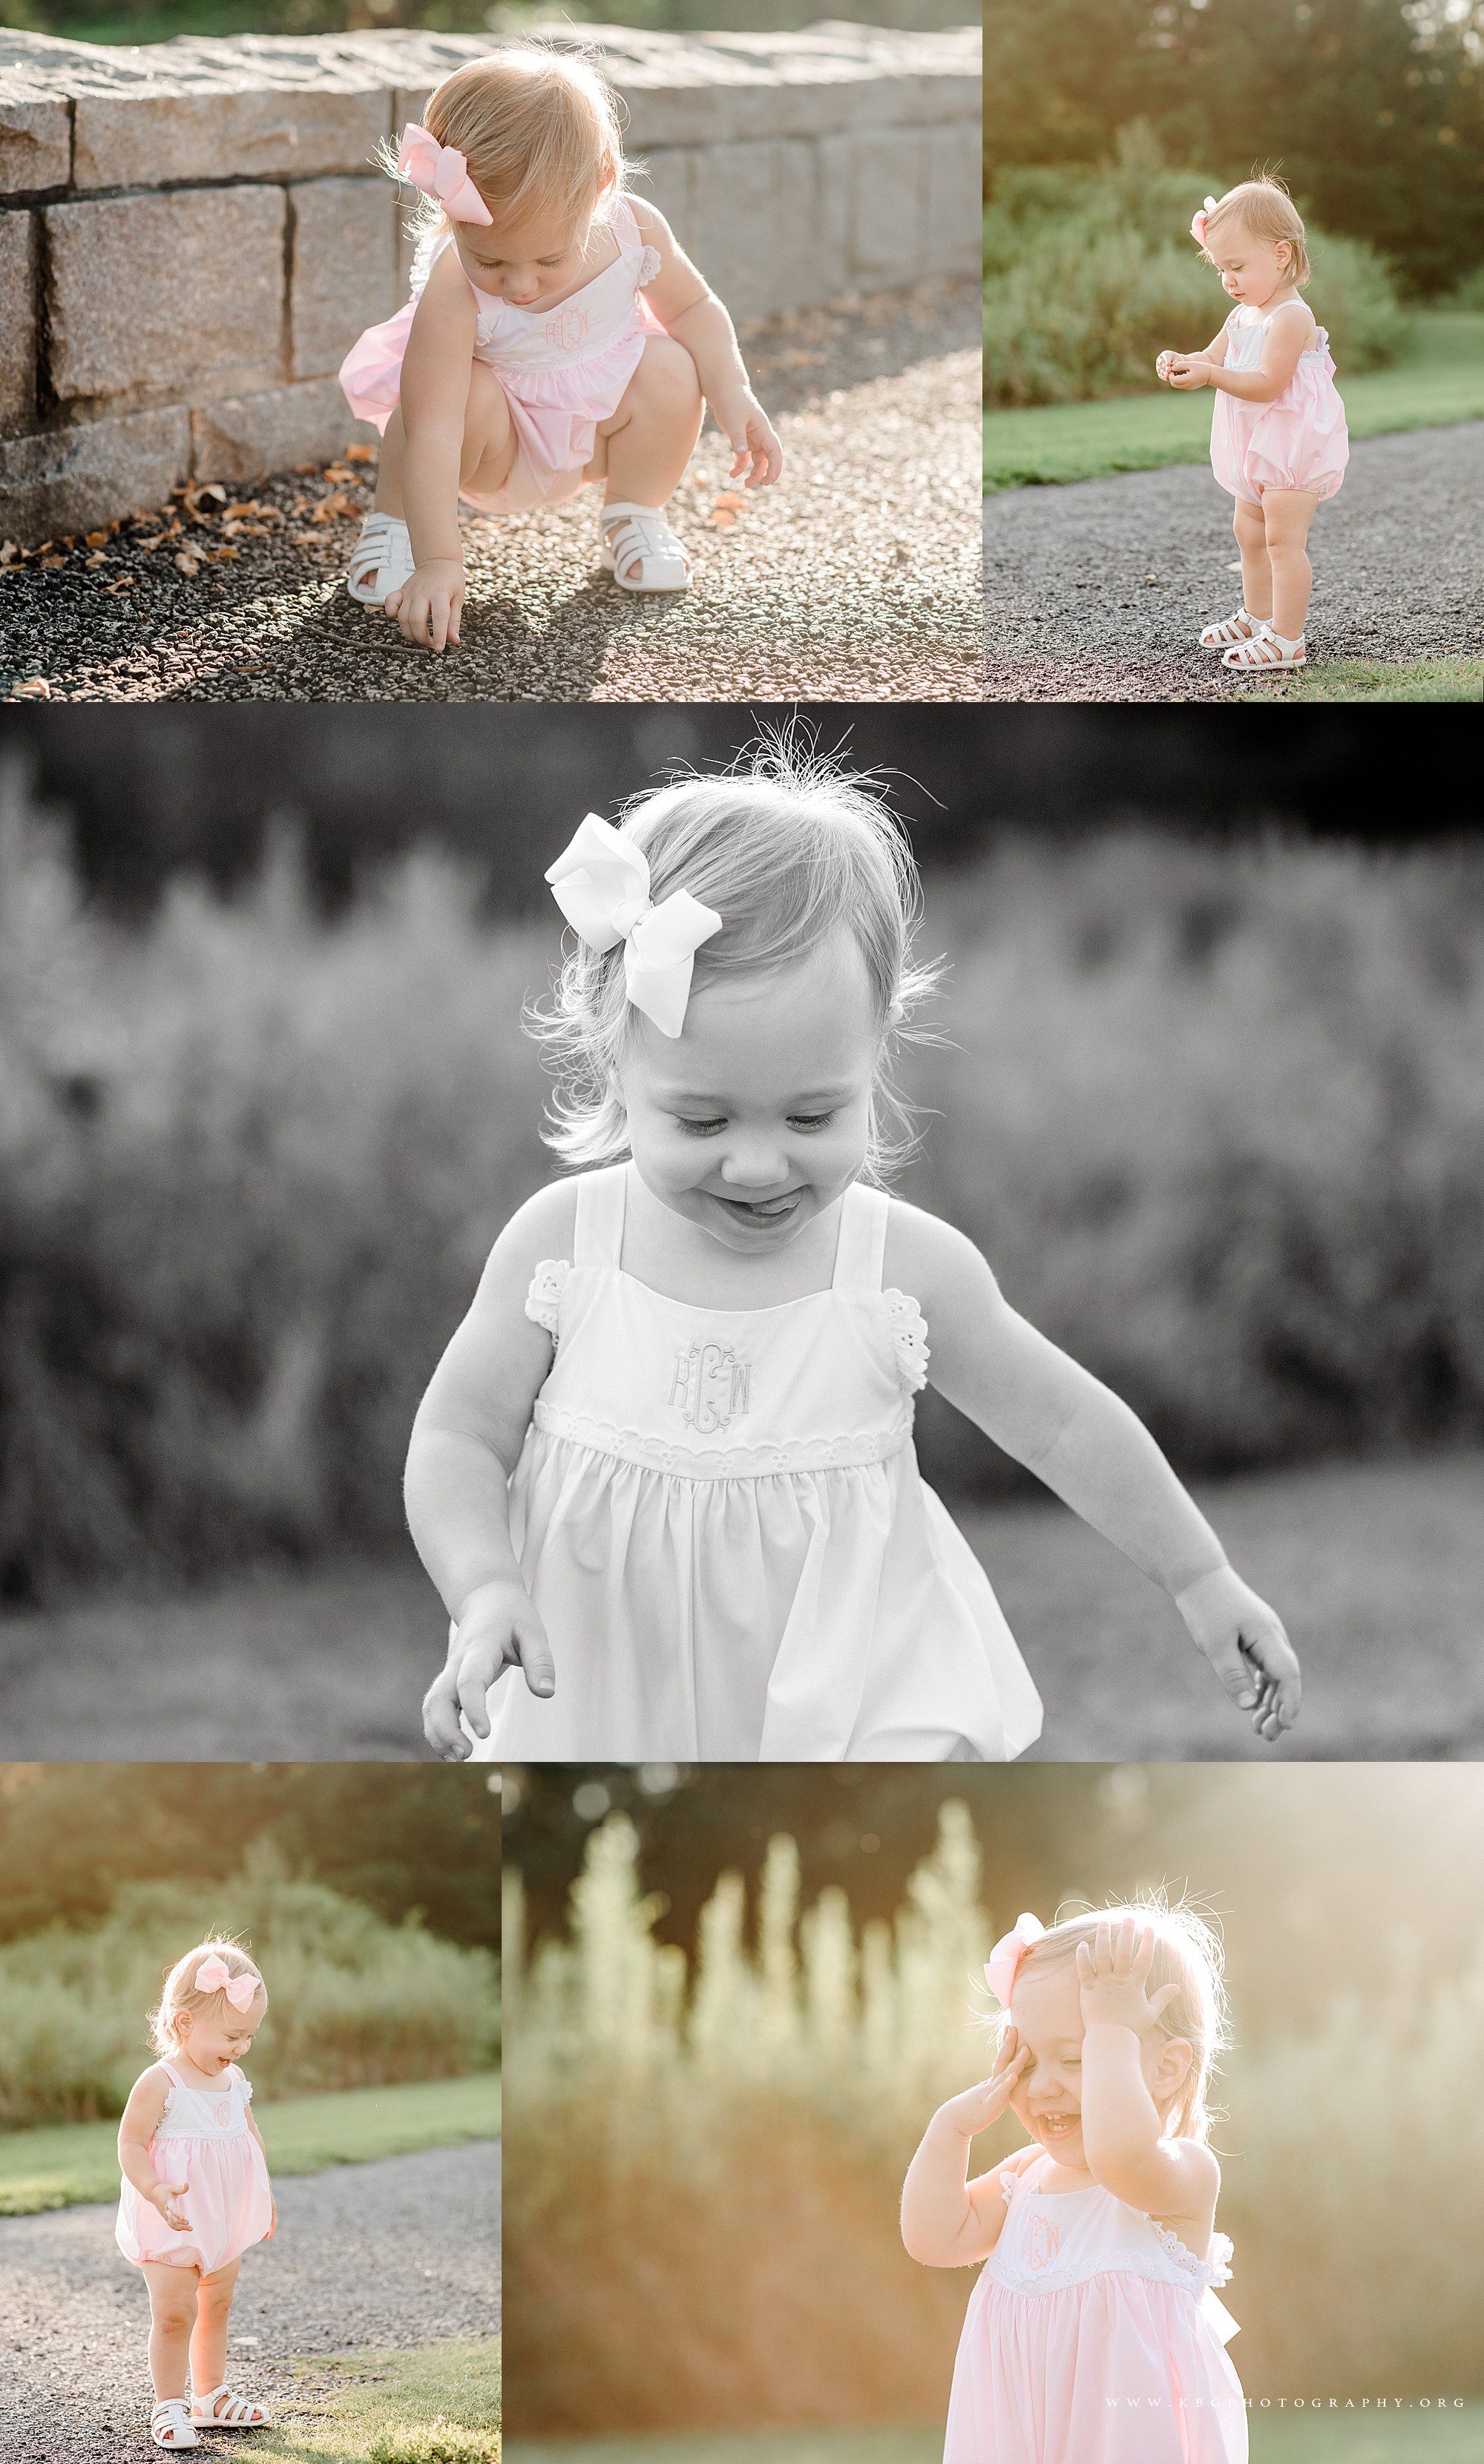 marietta baby photographer - little girl playing with rocks